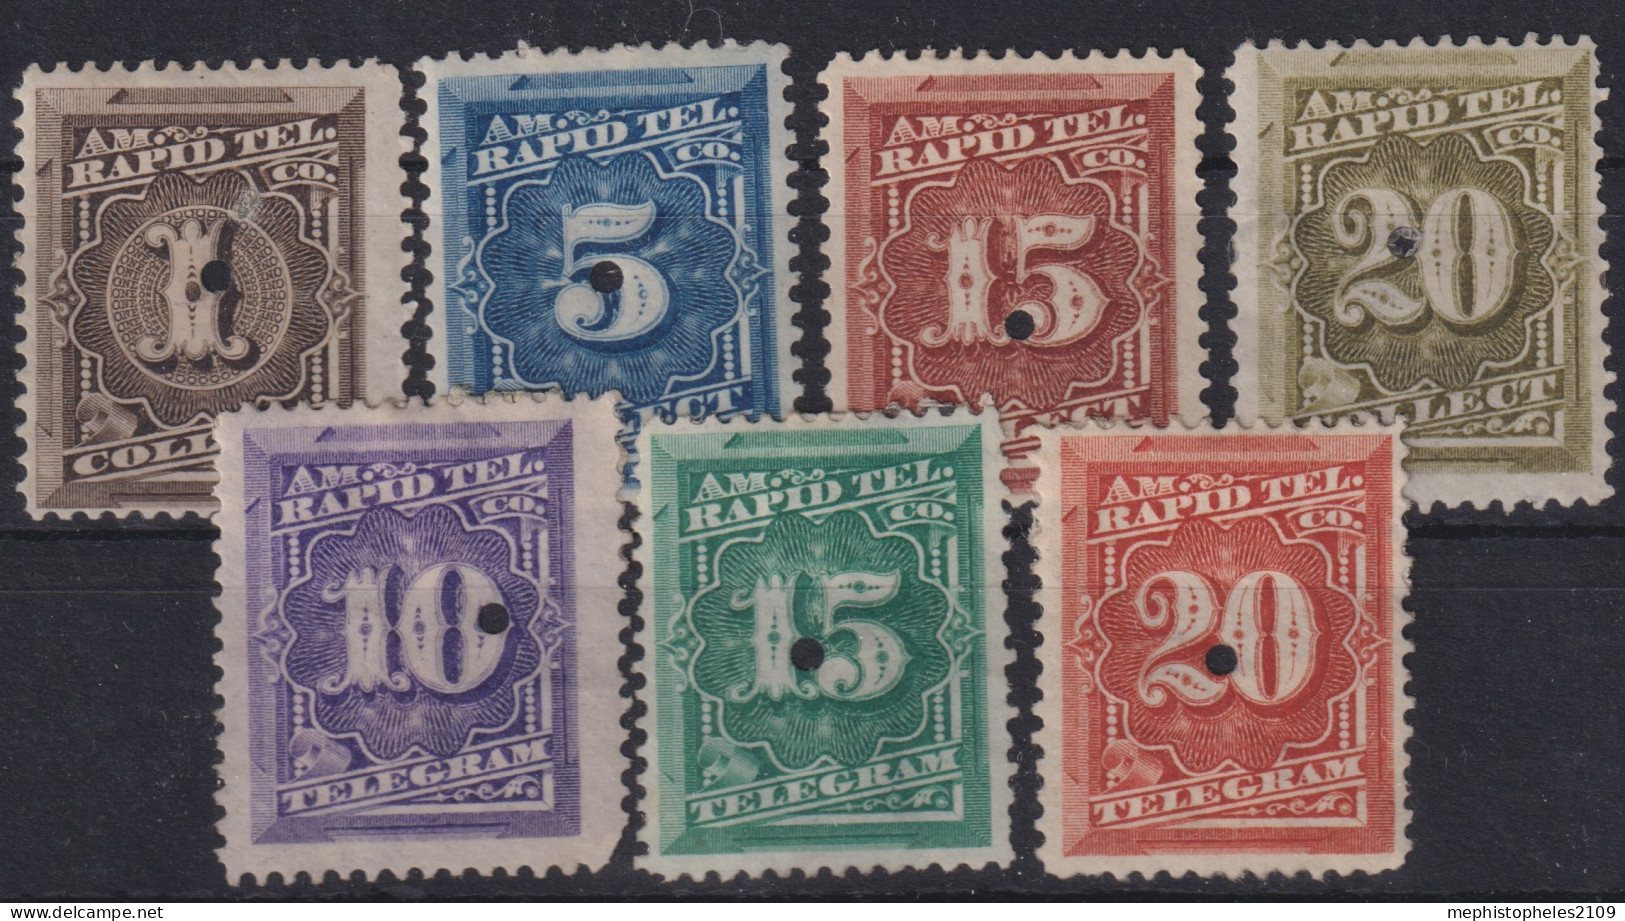 USA 1881 - Canceled - RAPID TELEGRAPH - 7 Stamps - Telegraphenmarken